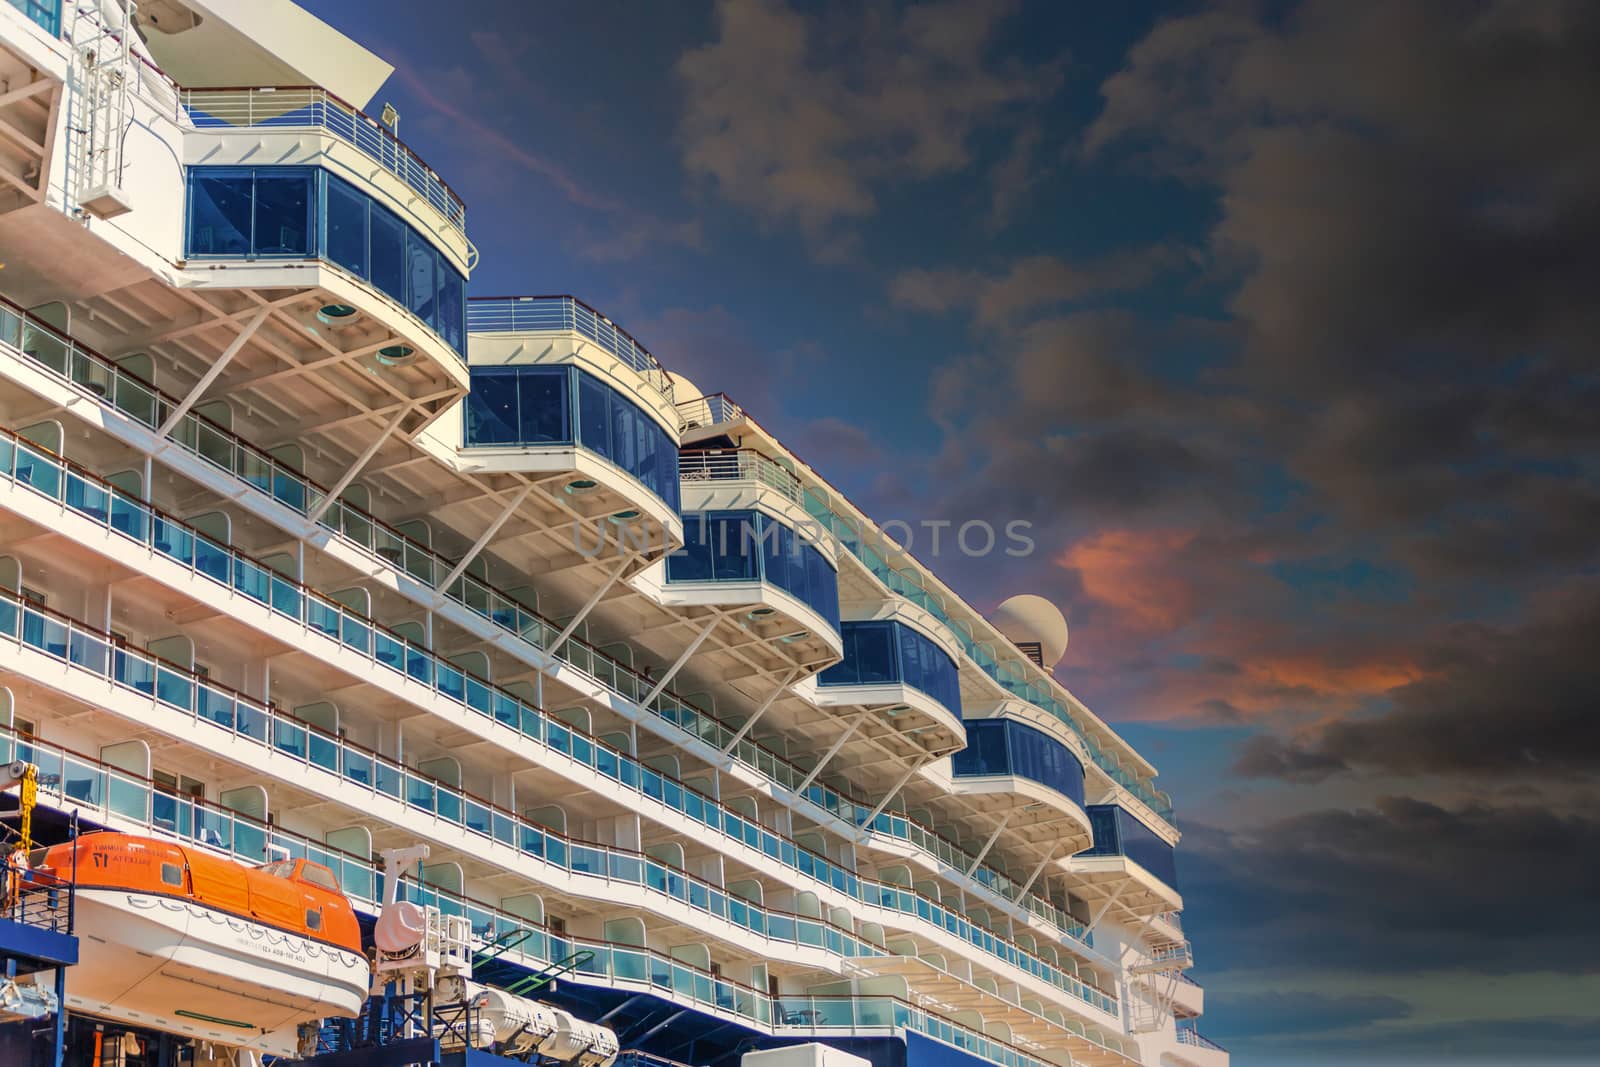 Upper Deck Windows of Cruise Ship by dbvirago